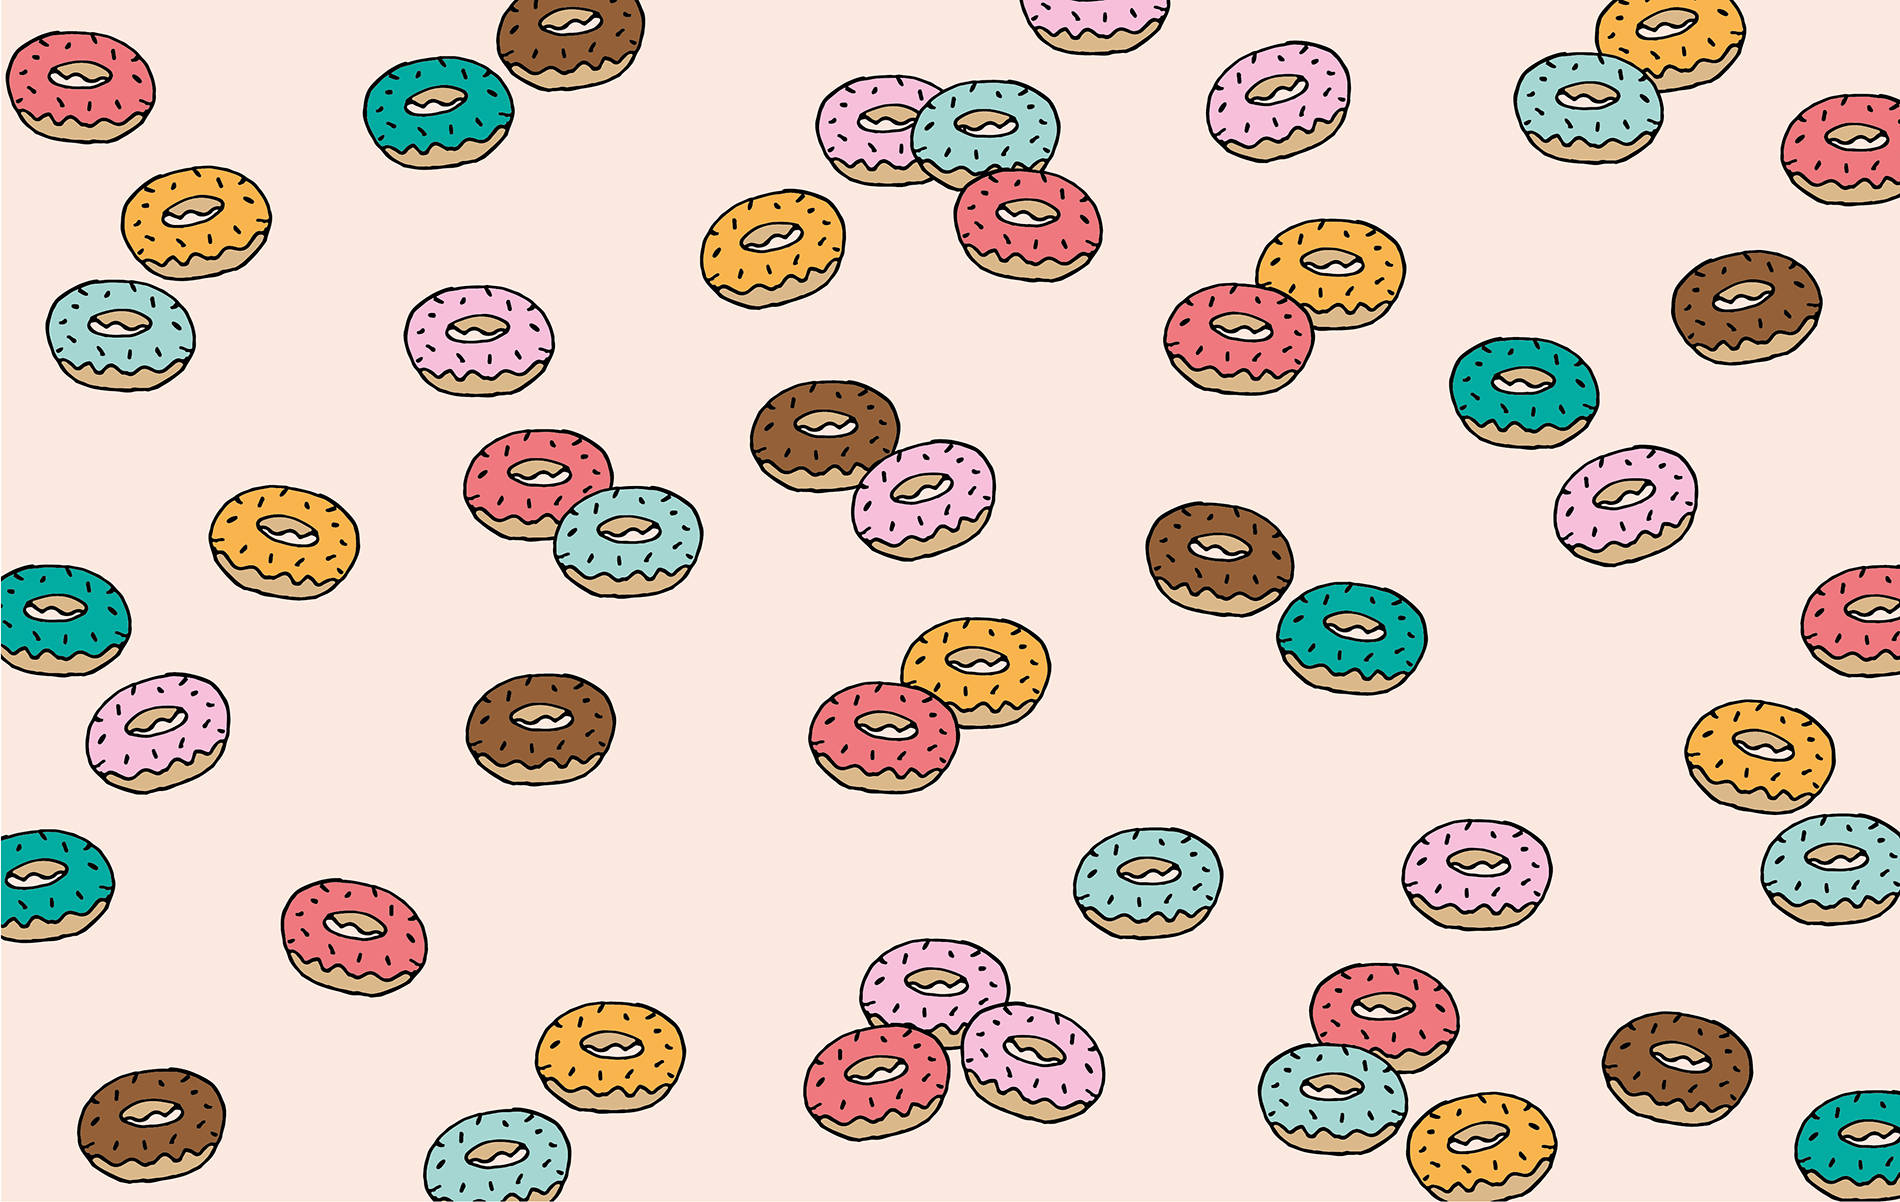 Scattered Glazed Donuts Background